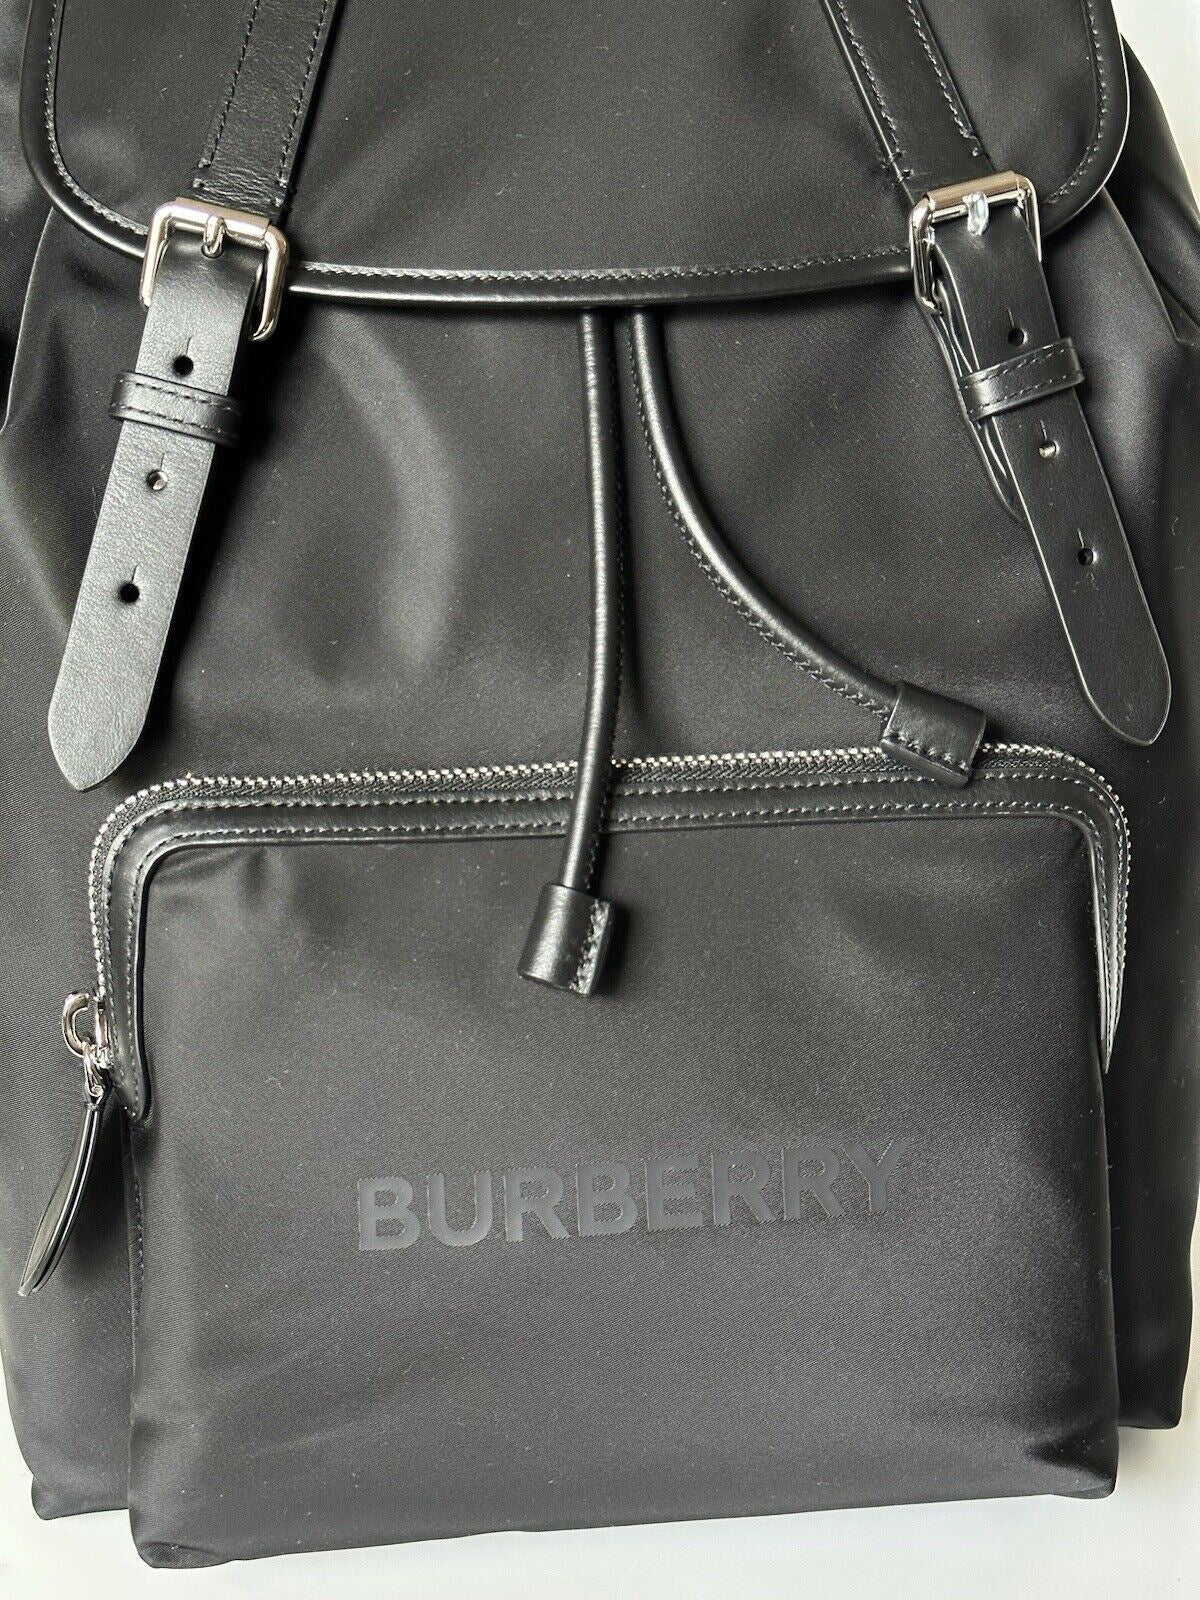 NWT $1350 Burberry Aviator Rucksack Nylon/Leather Backpack Black 8061668